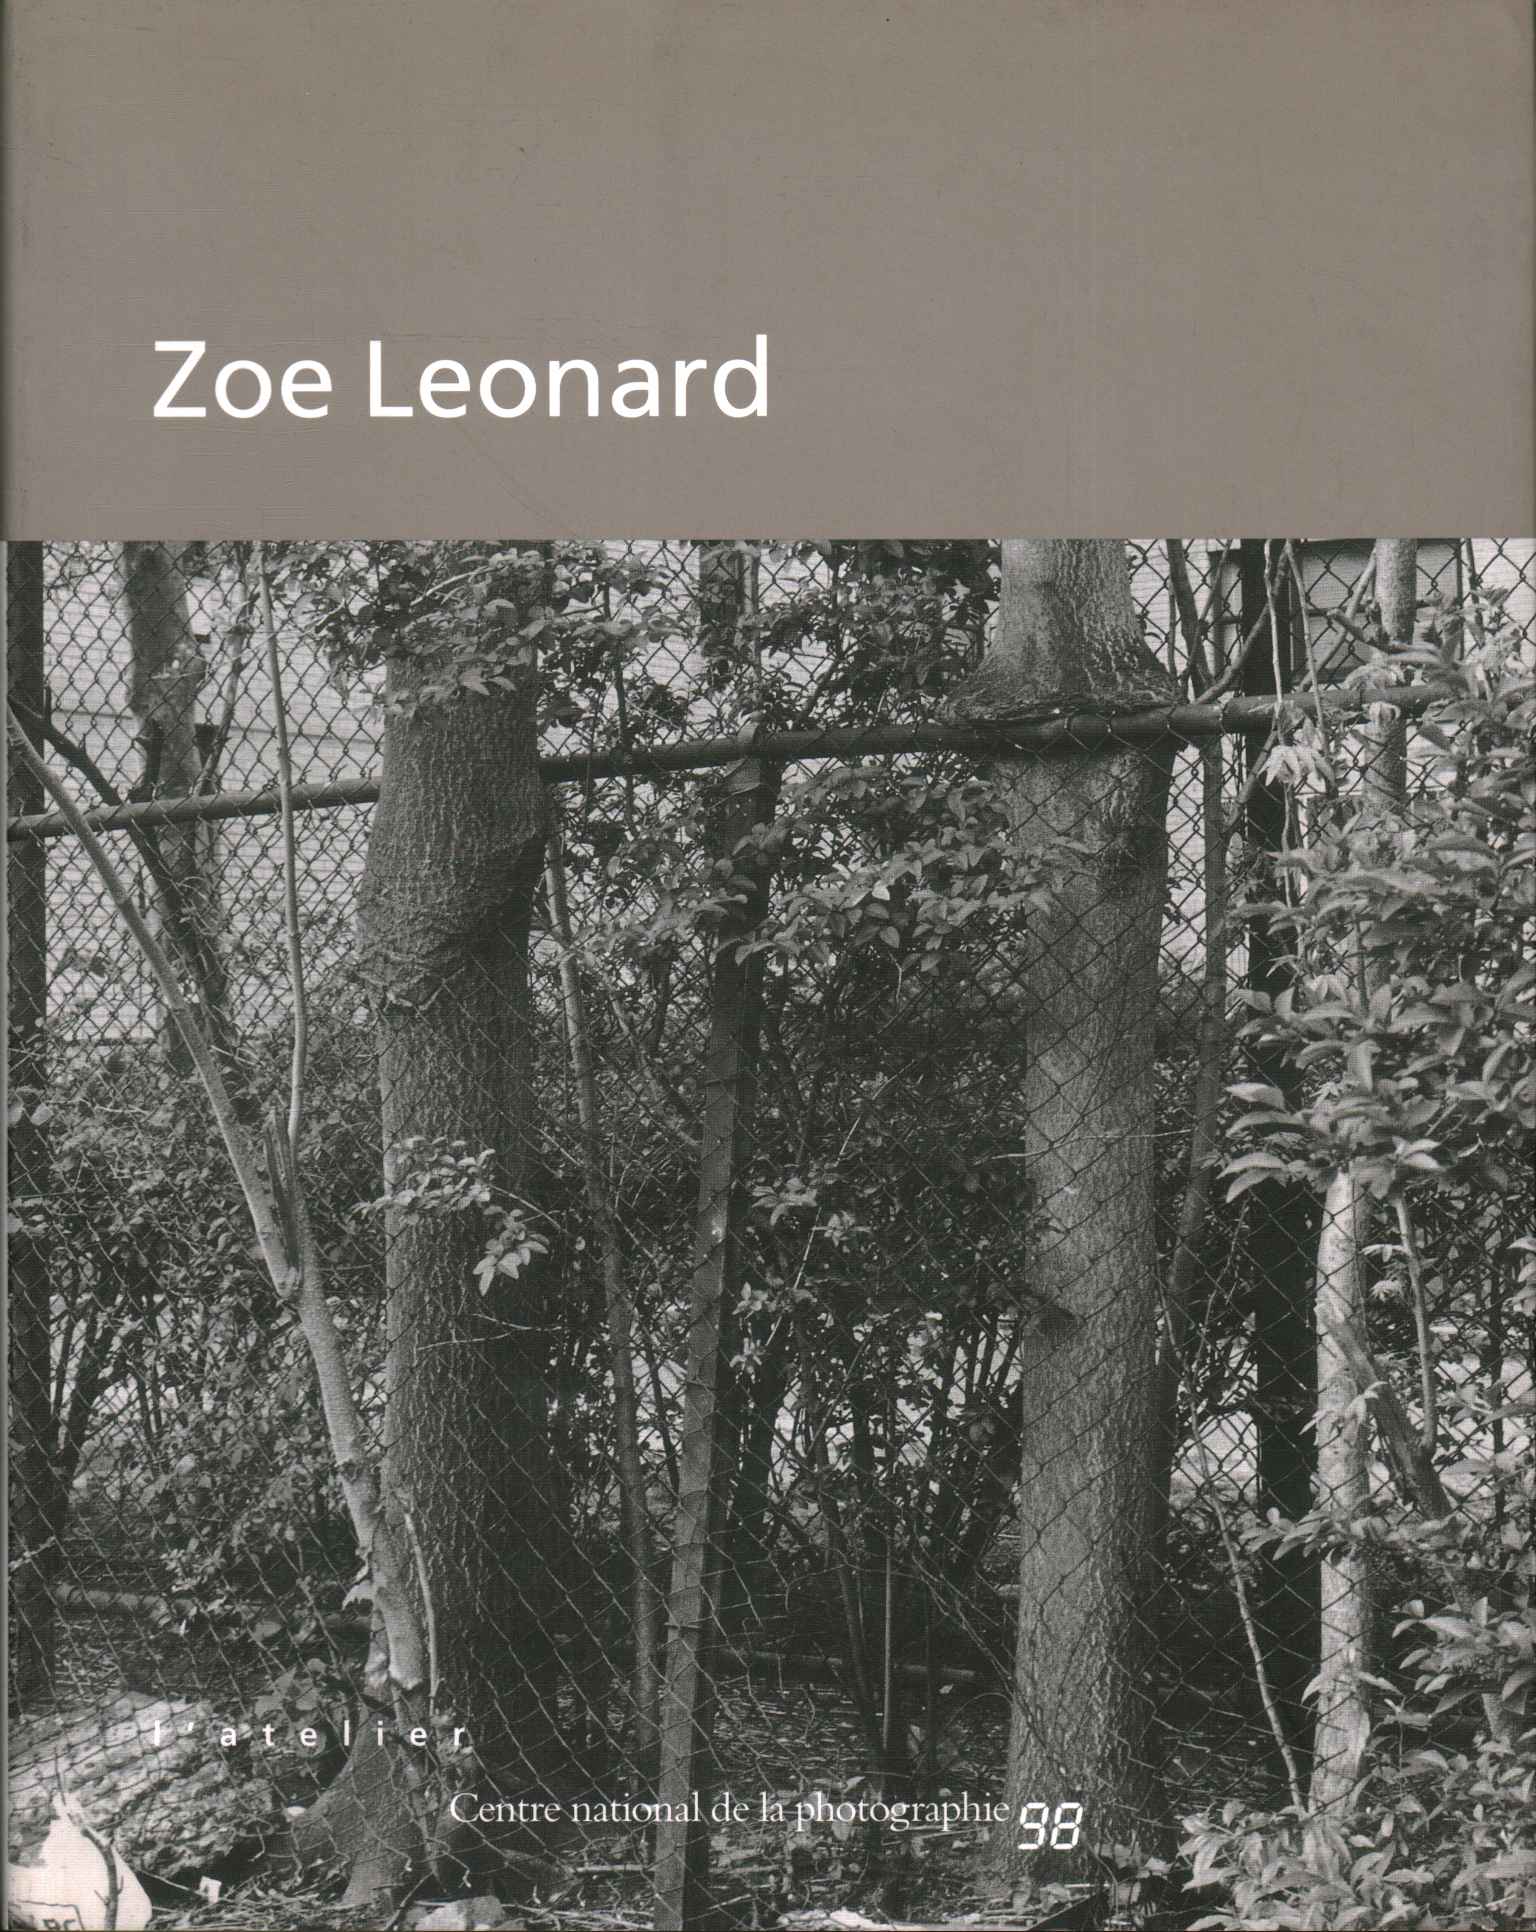 Zoe Leonard